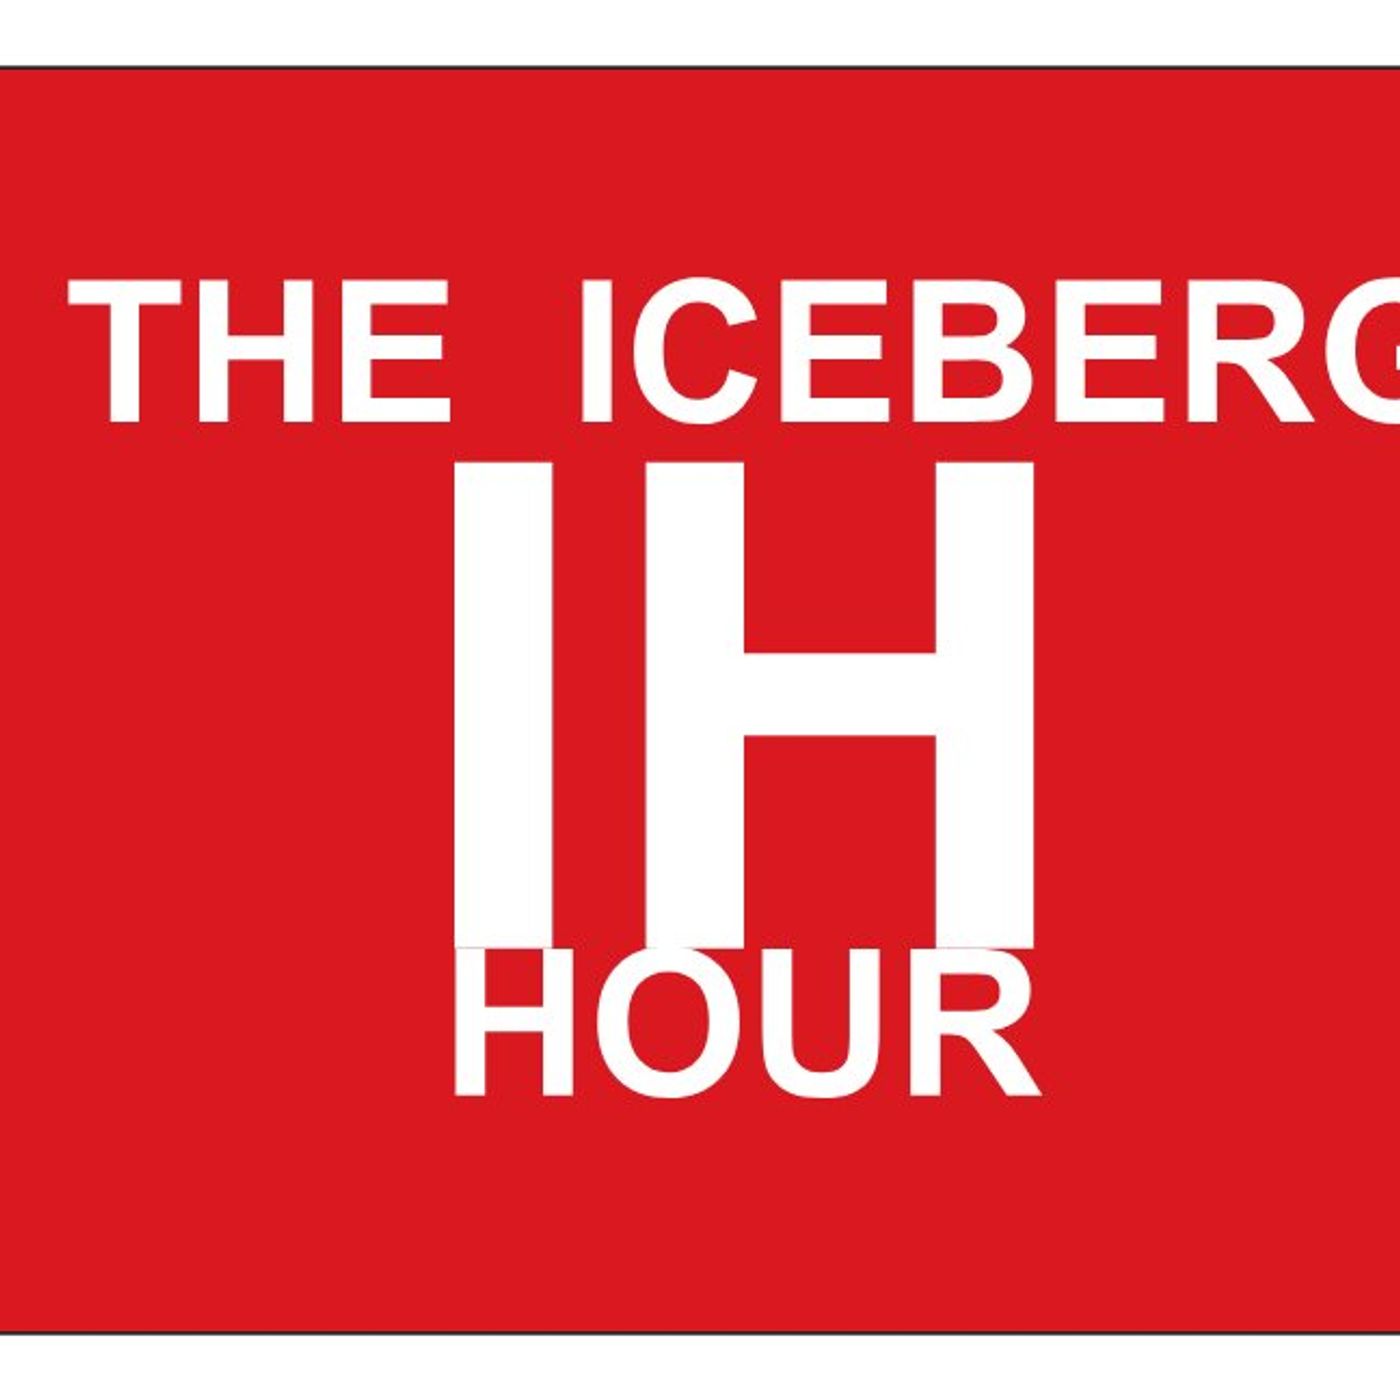 THE ICEBERG HOUR Hosted by ICEBERG